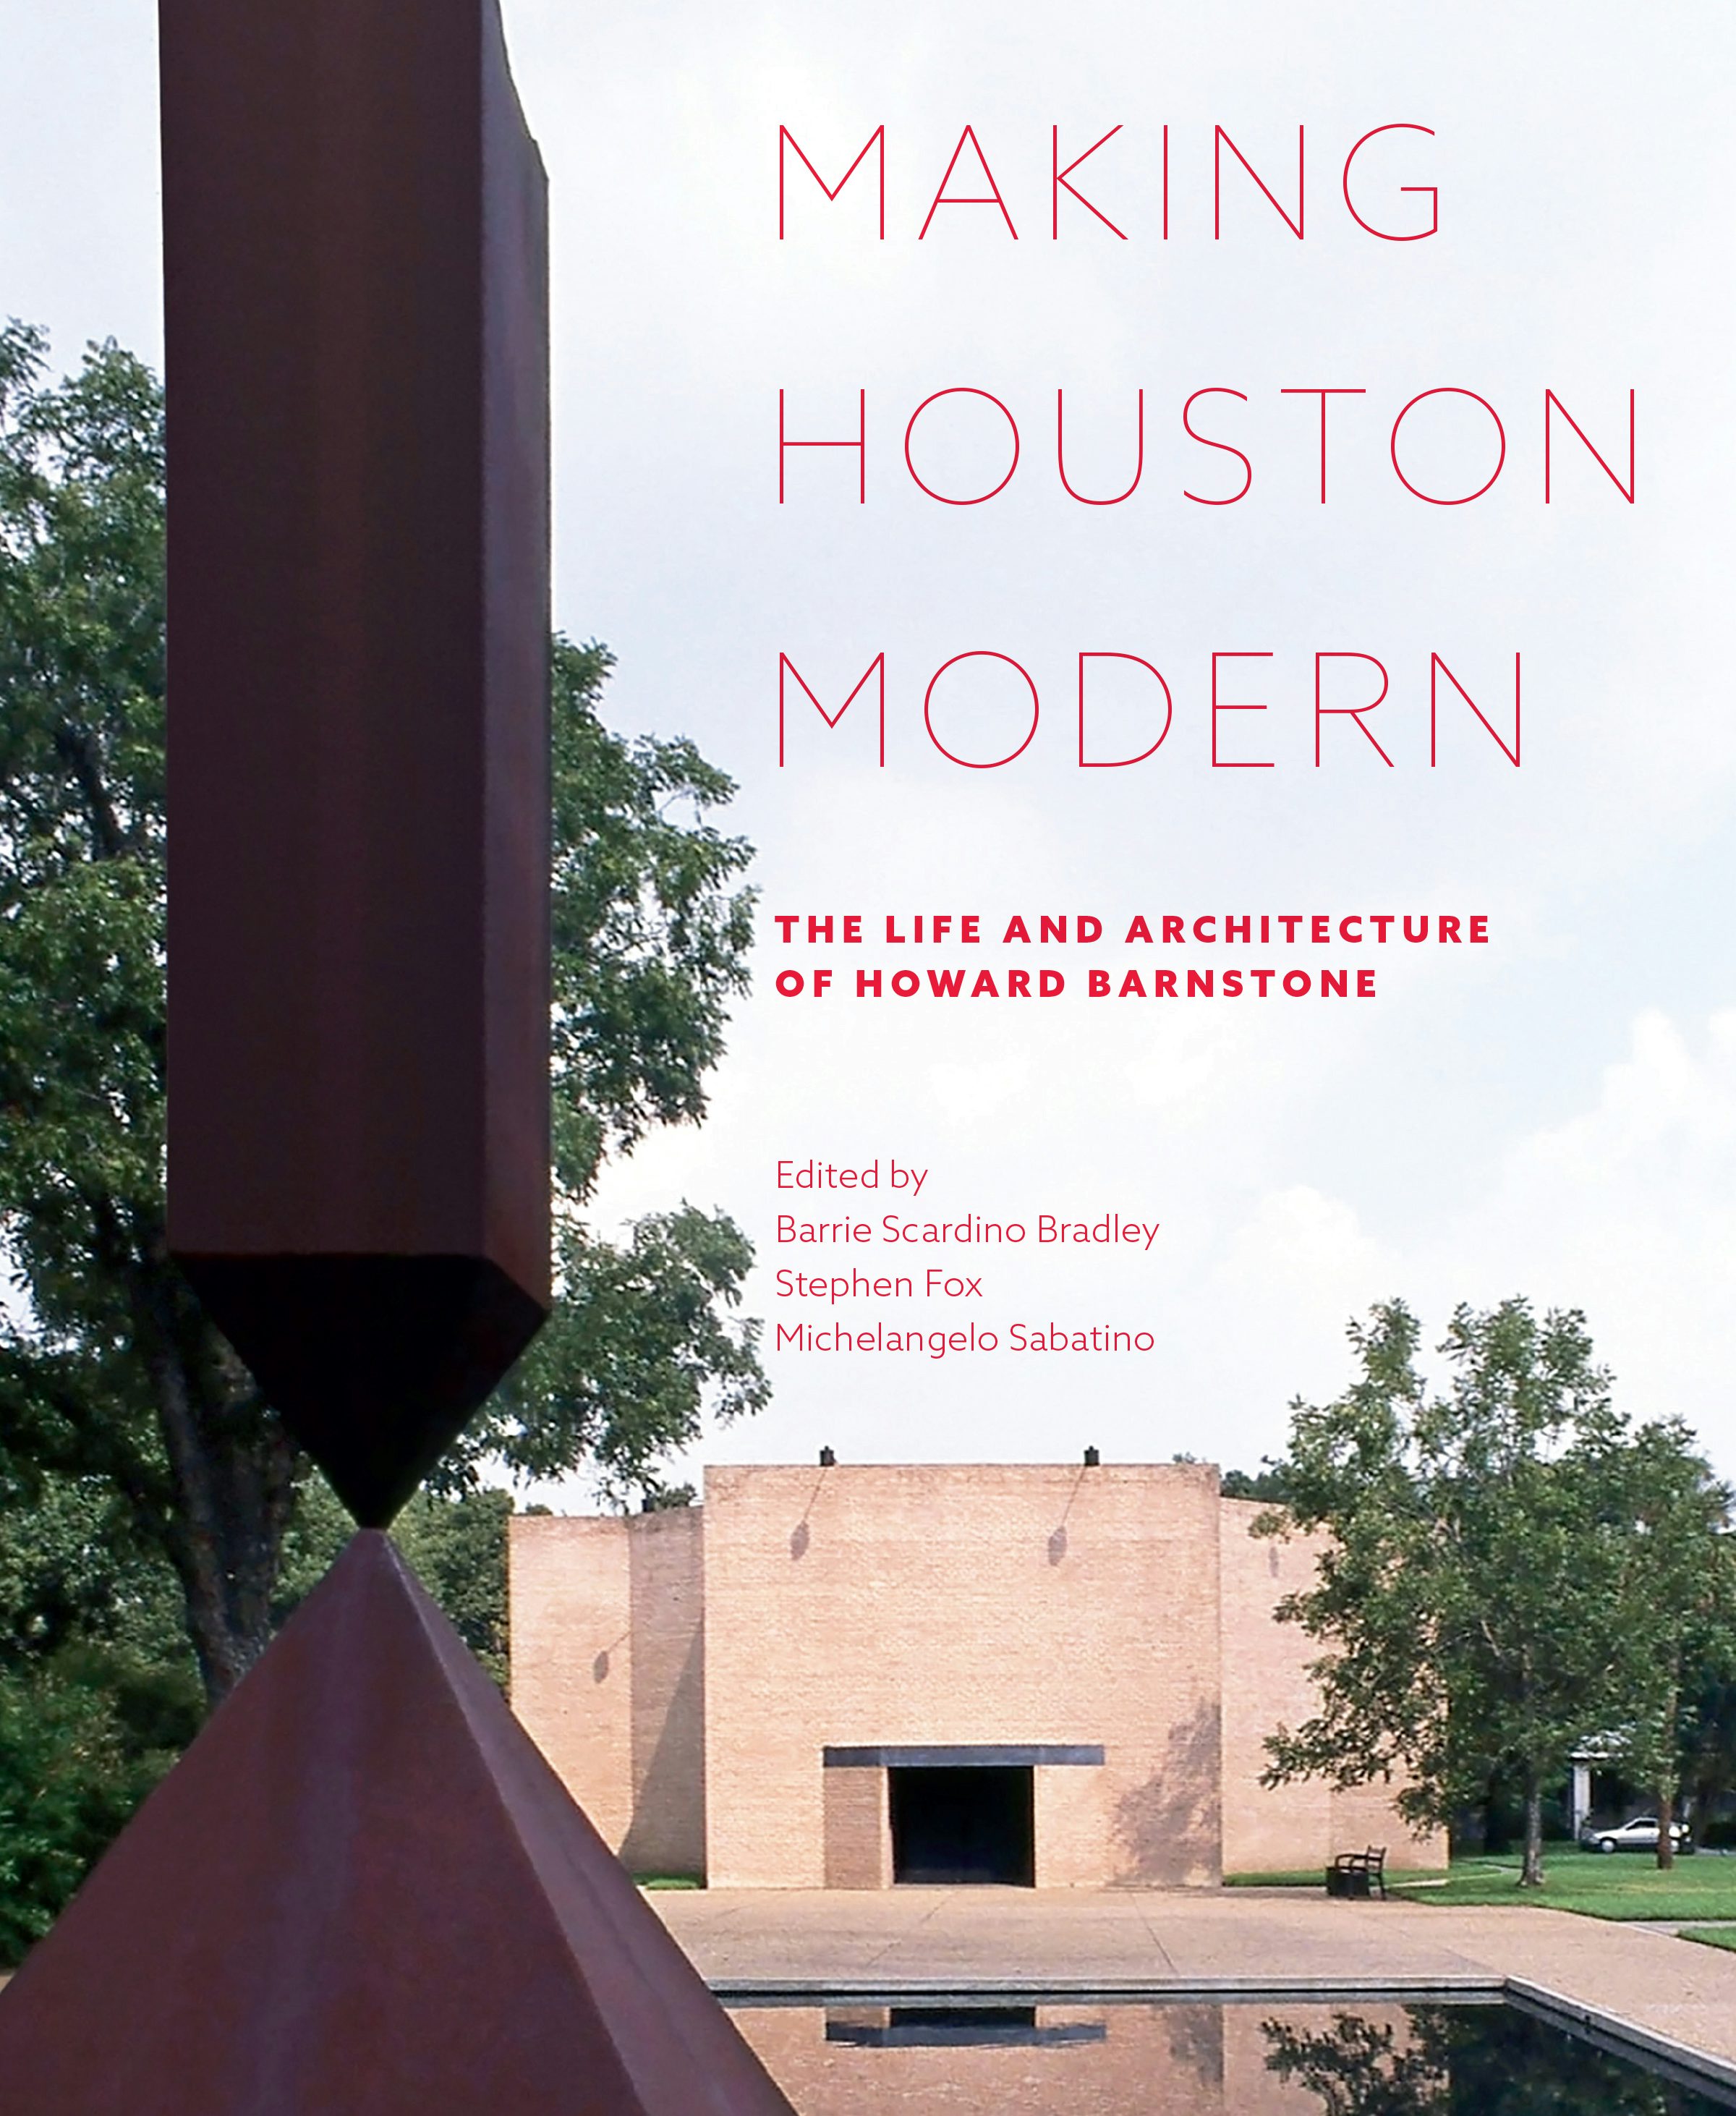 Making Houston Modern edited by Barrie Scardino Bradley, Stephen Fox and Michelangelo Sabatino